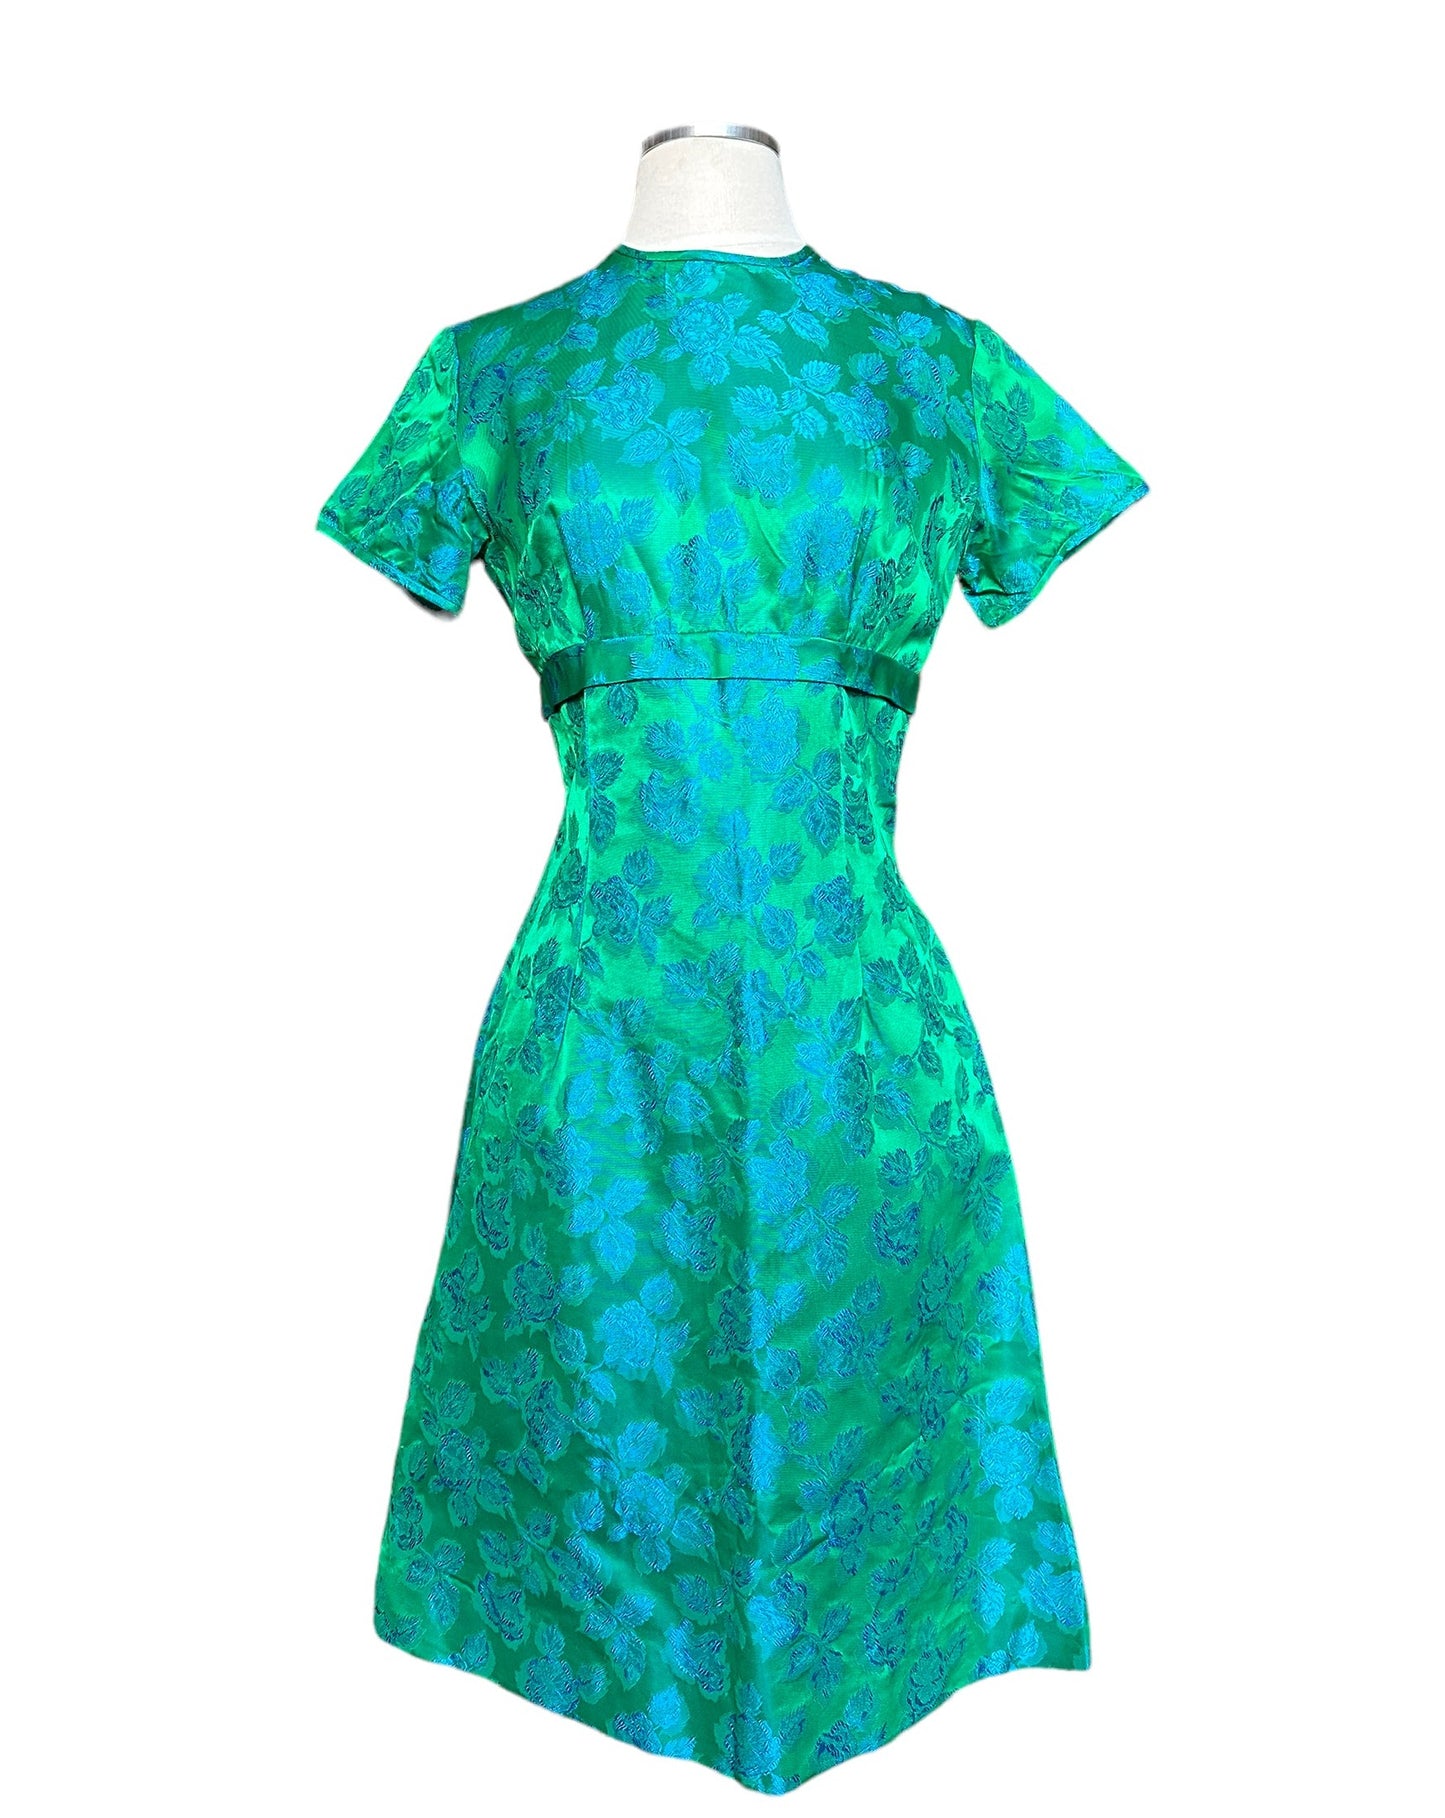 Front full viewVintage 1950s Blue/Green Brocade Dress |  Barn Owl Vintage Seattle | True Vintage Dresses